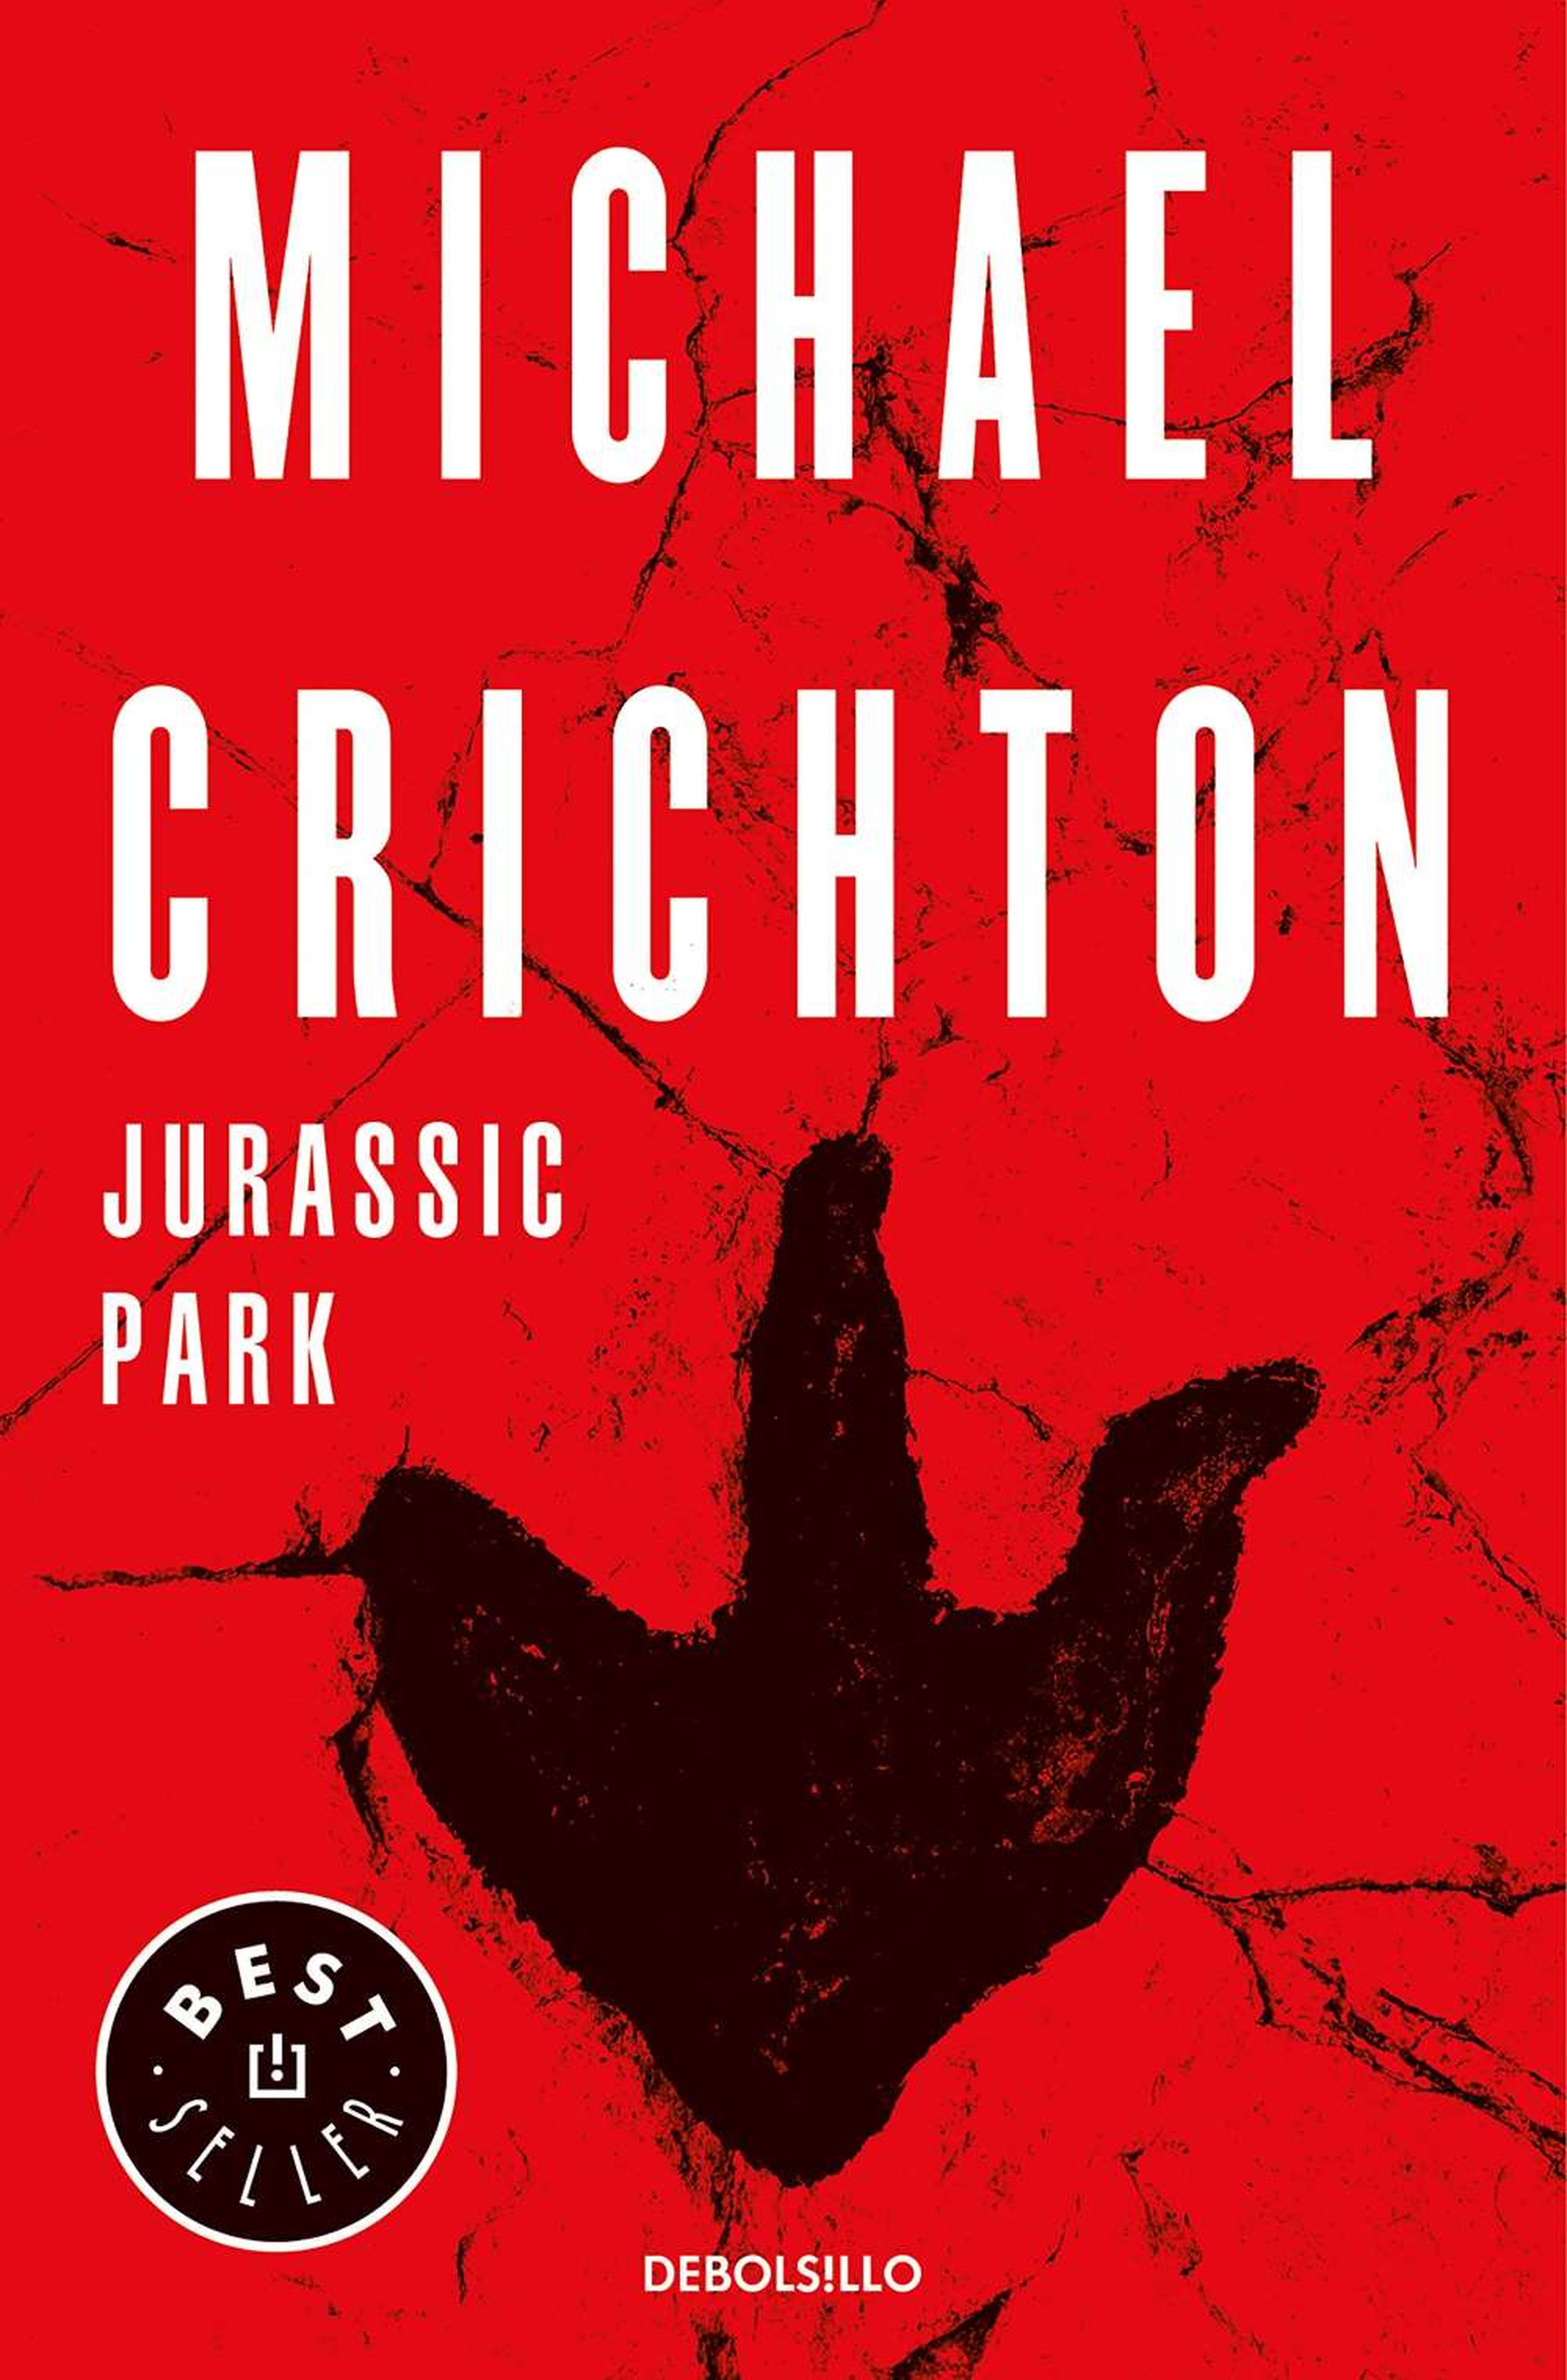 Parque Jurásico de Michael Crichton